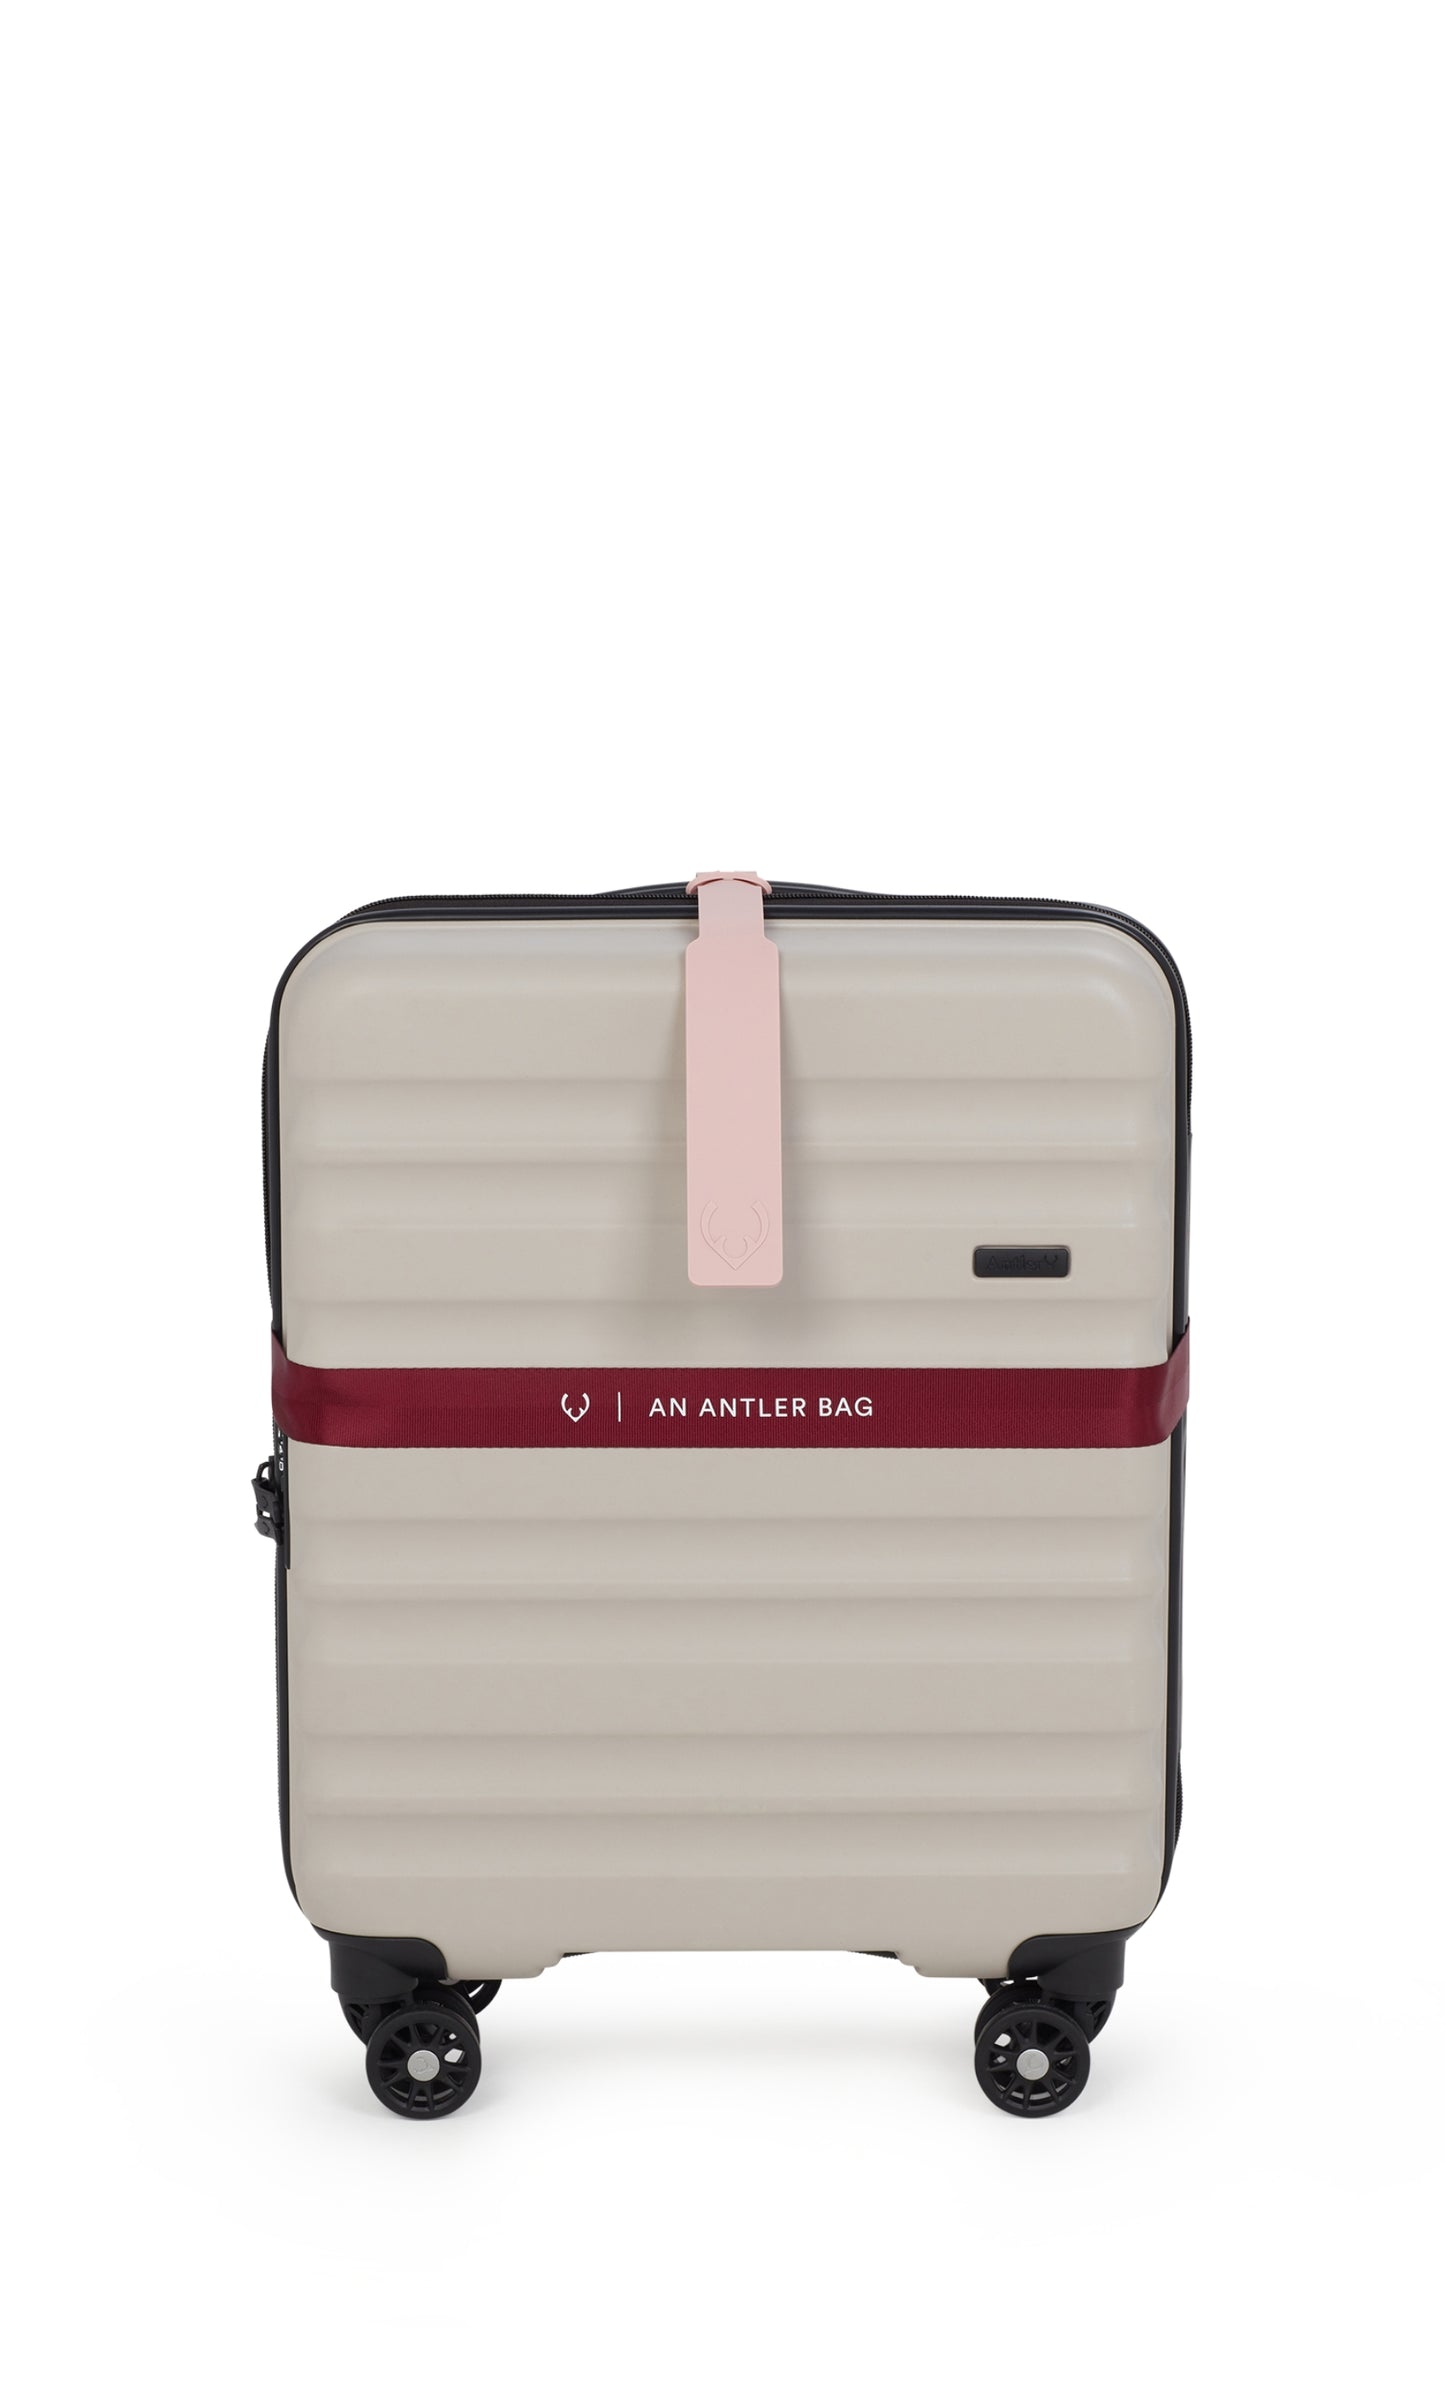 Antler luggage tag in moorland pink